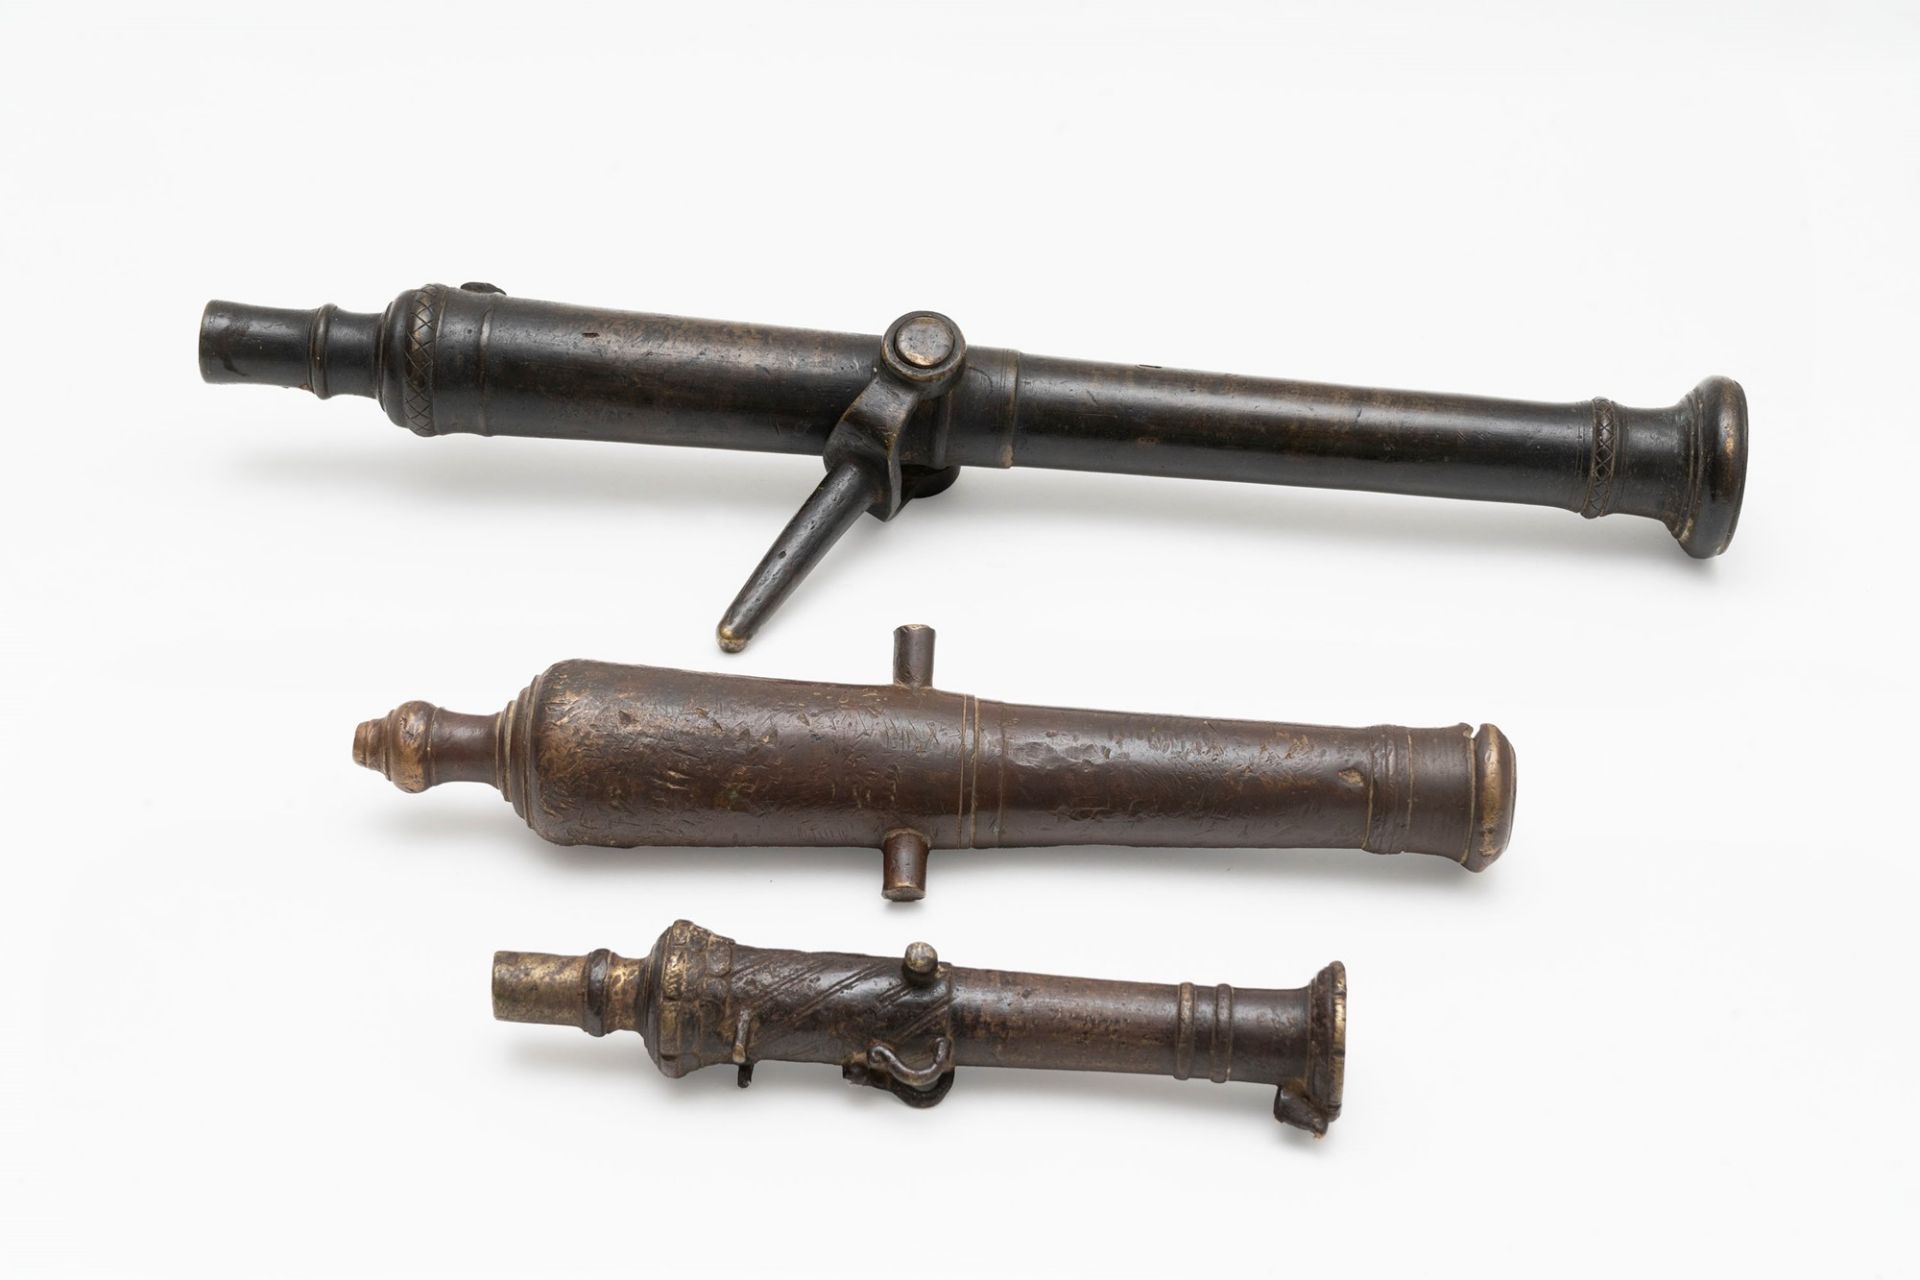 Three ancient bronze cannon models